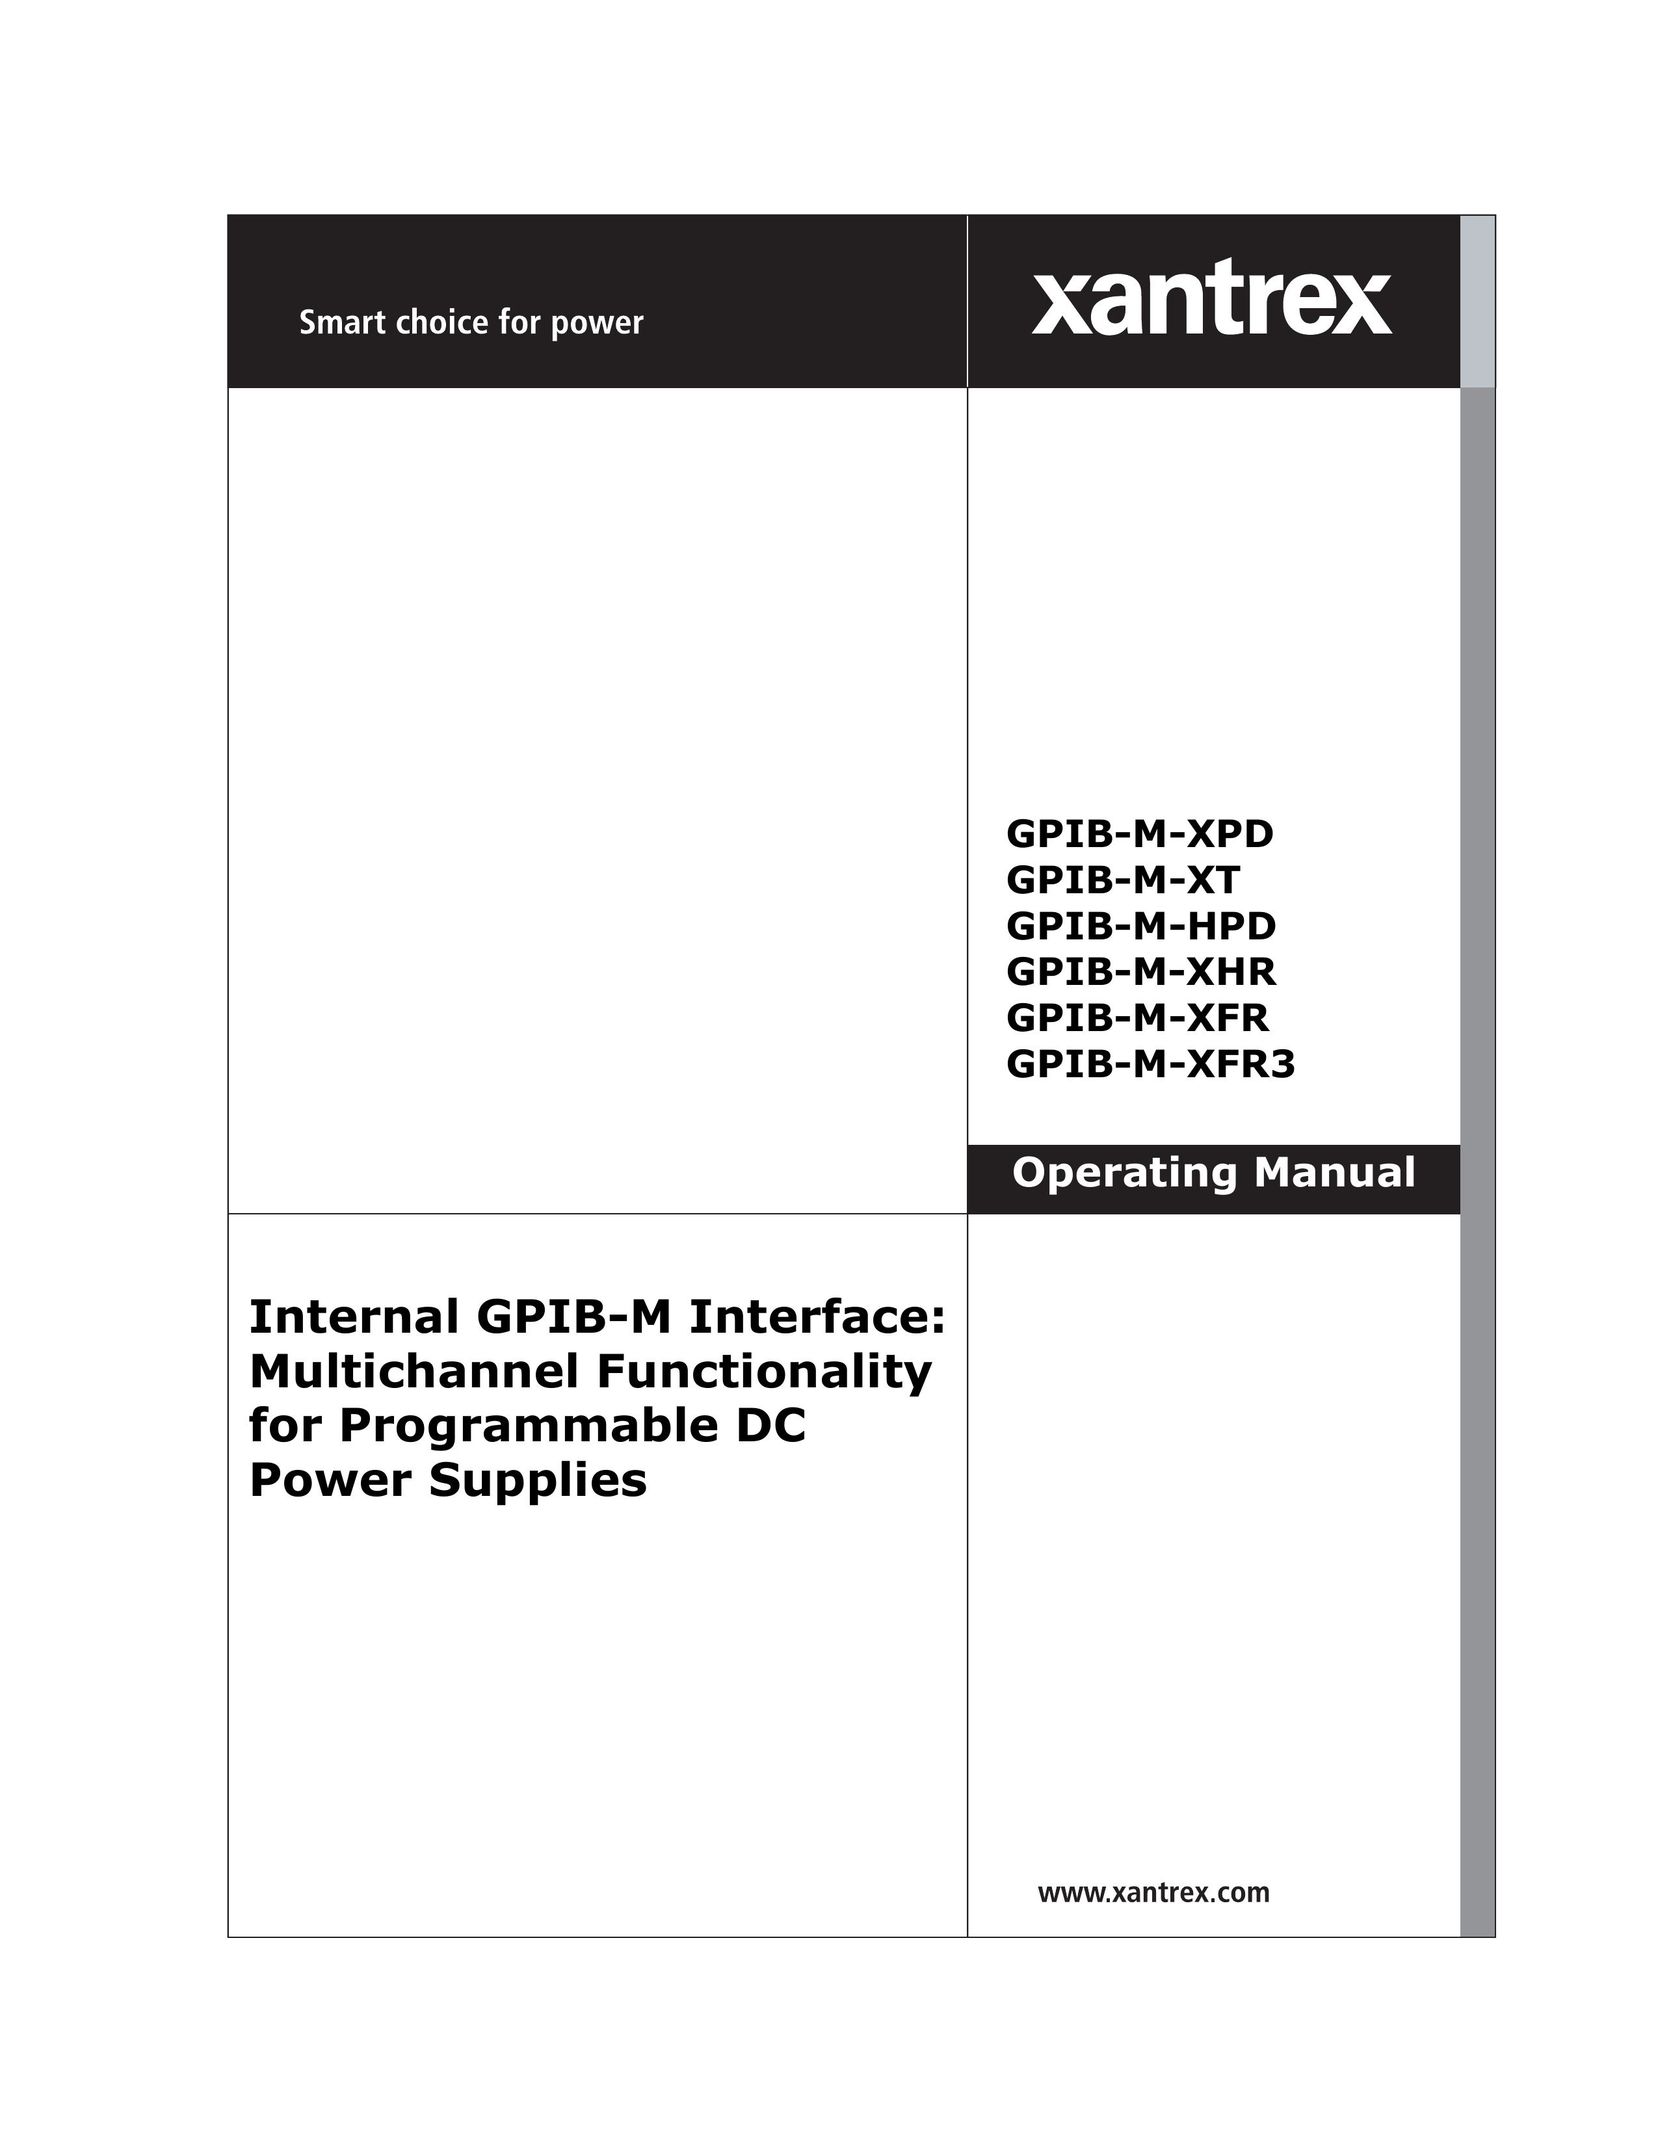 Xantrex Technology GPIB-M-XHR Power Supply User Manual